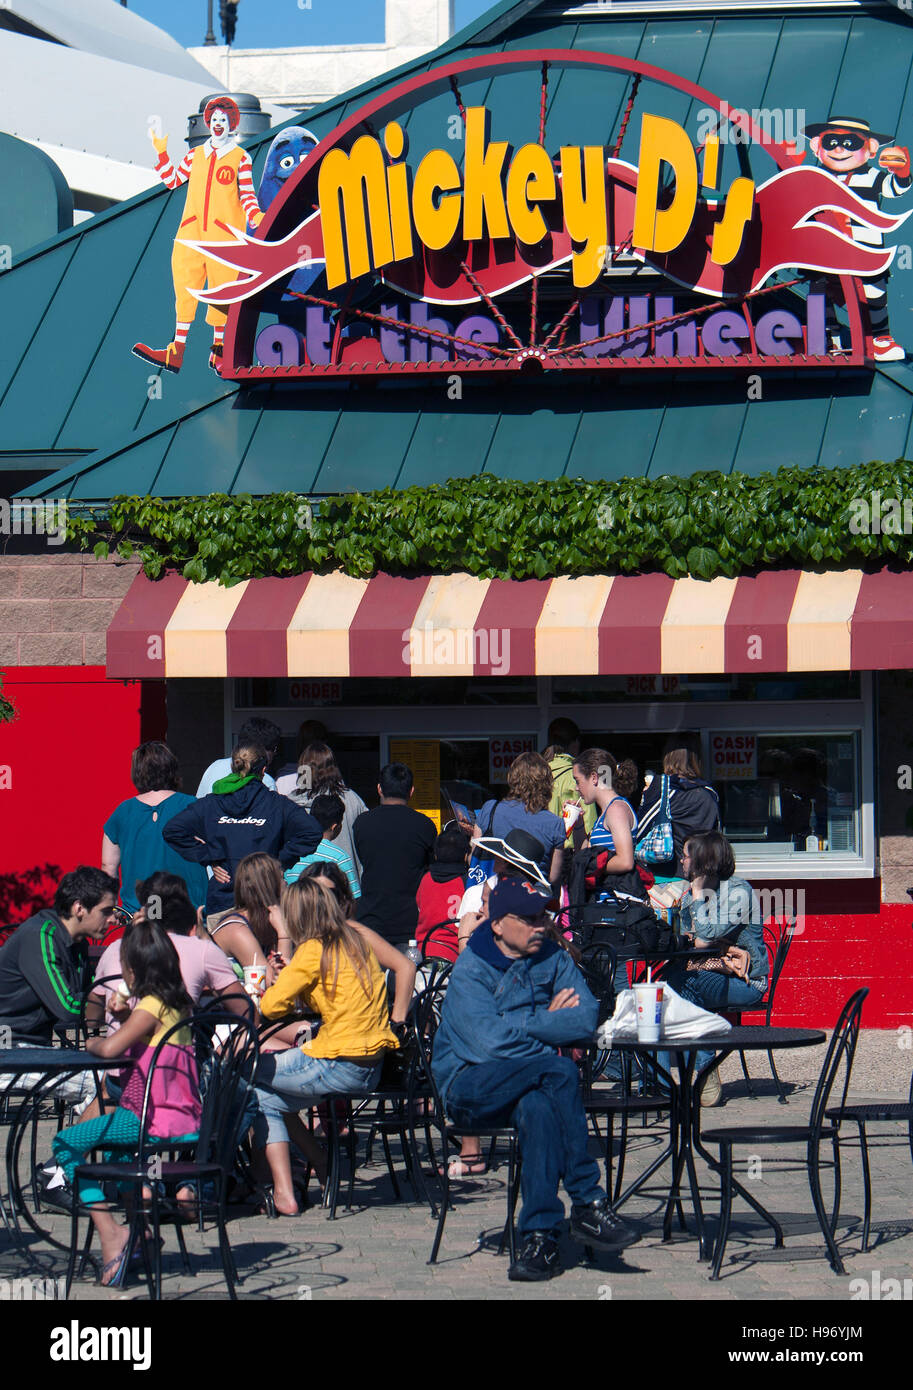 Mickey D S At The Wheel Mcdonalds Hamburger Restaurant Chicago Illinois Usa Stock Photo Alamy